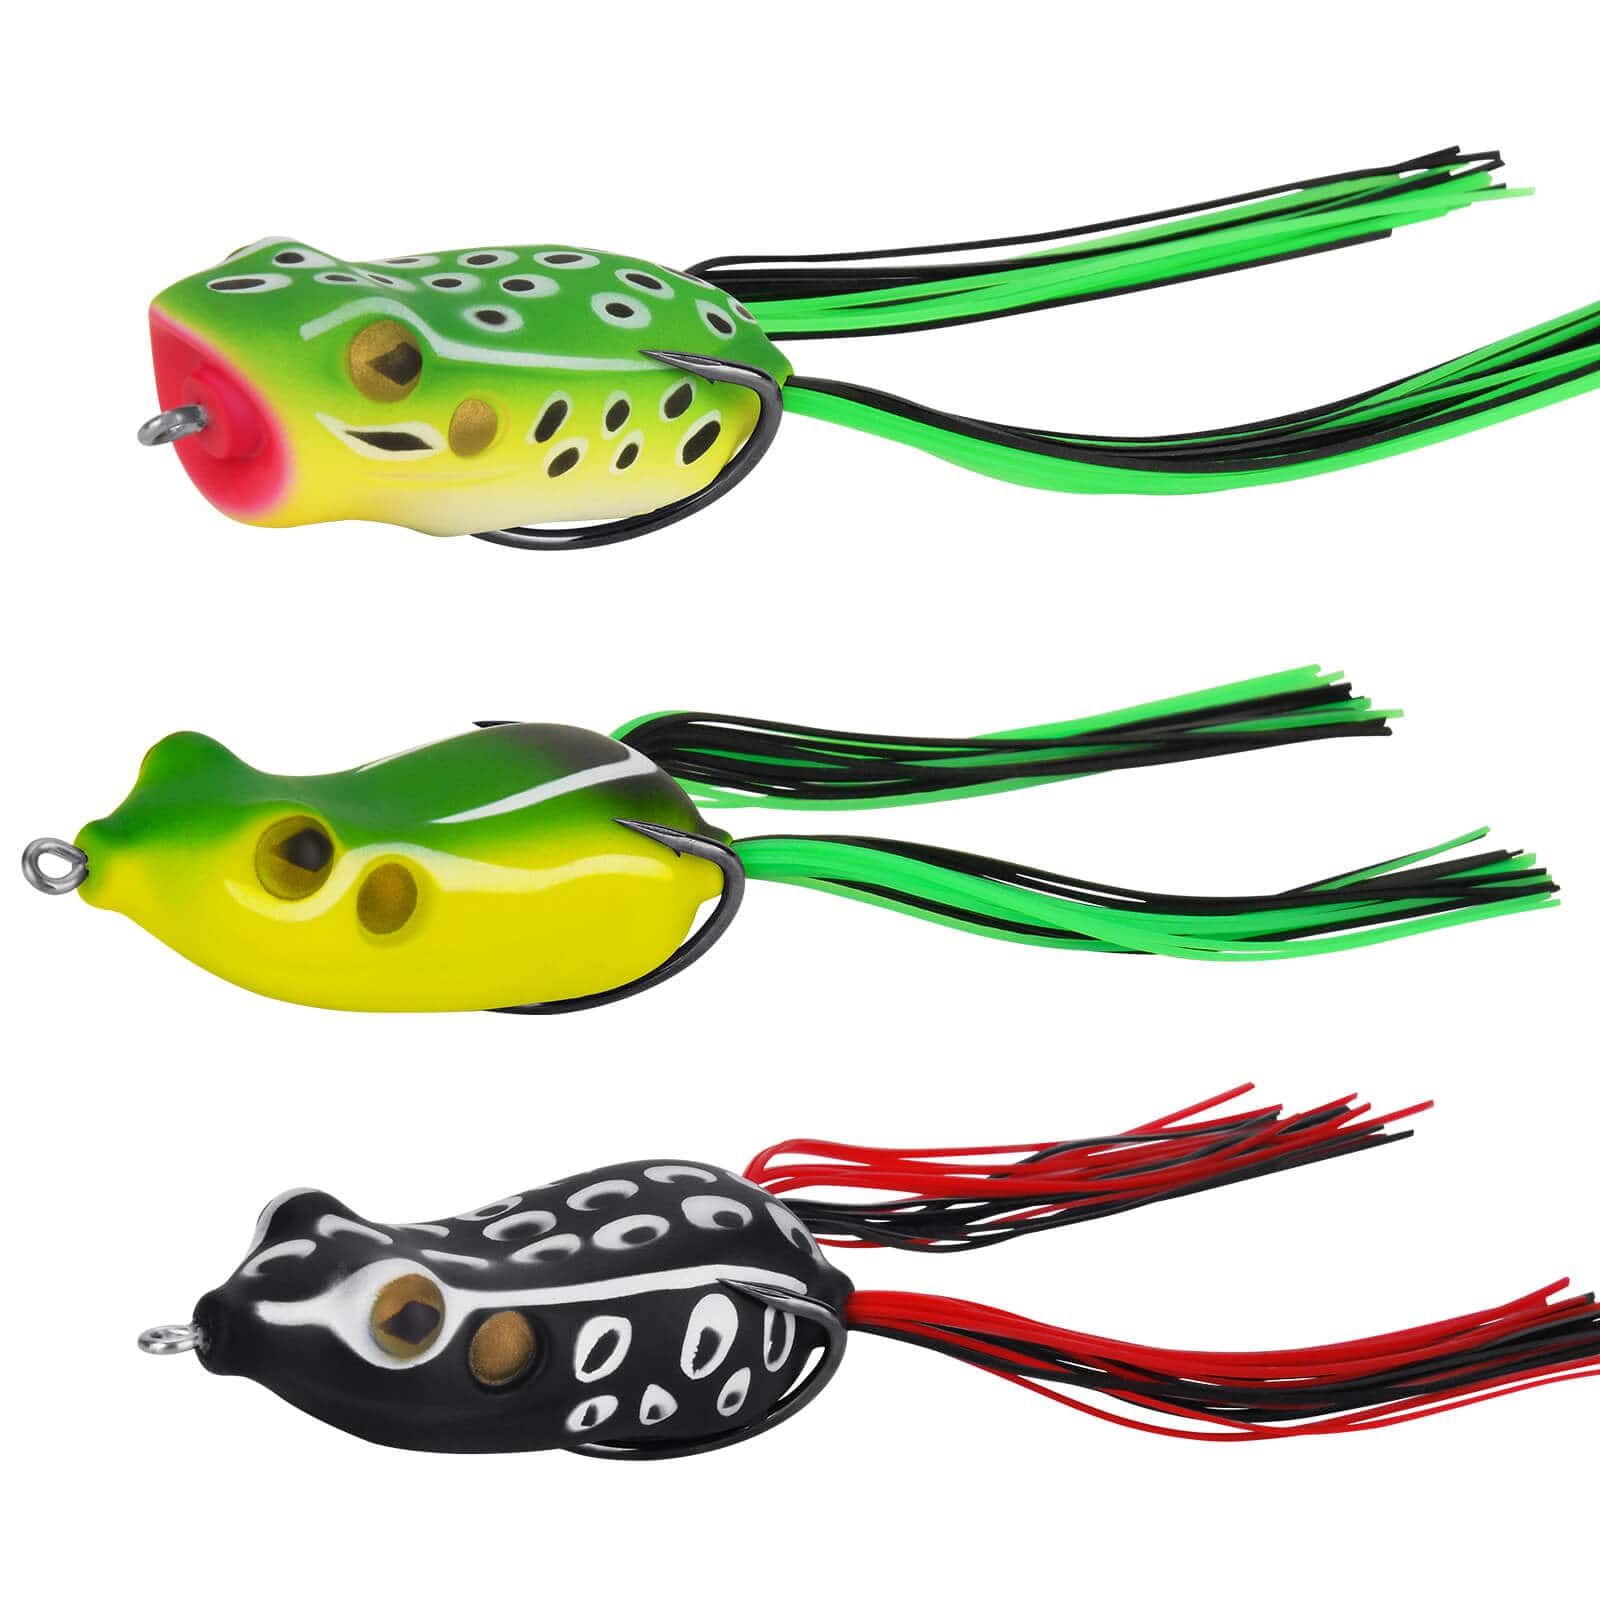 MadBite 3/5 Pack Frog Fishing Lure Kits - B: 3 Pack Frog Kits